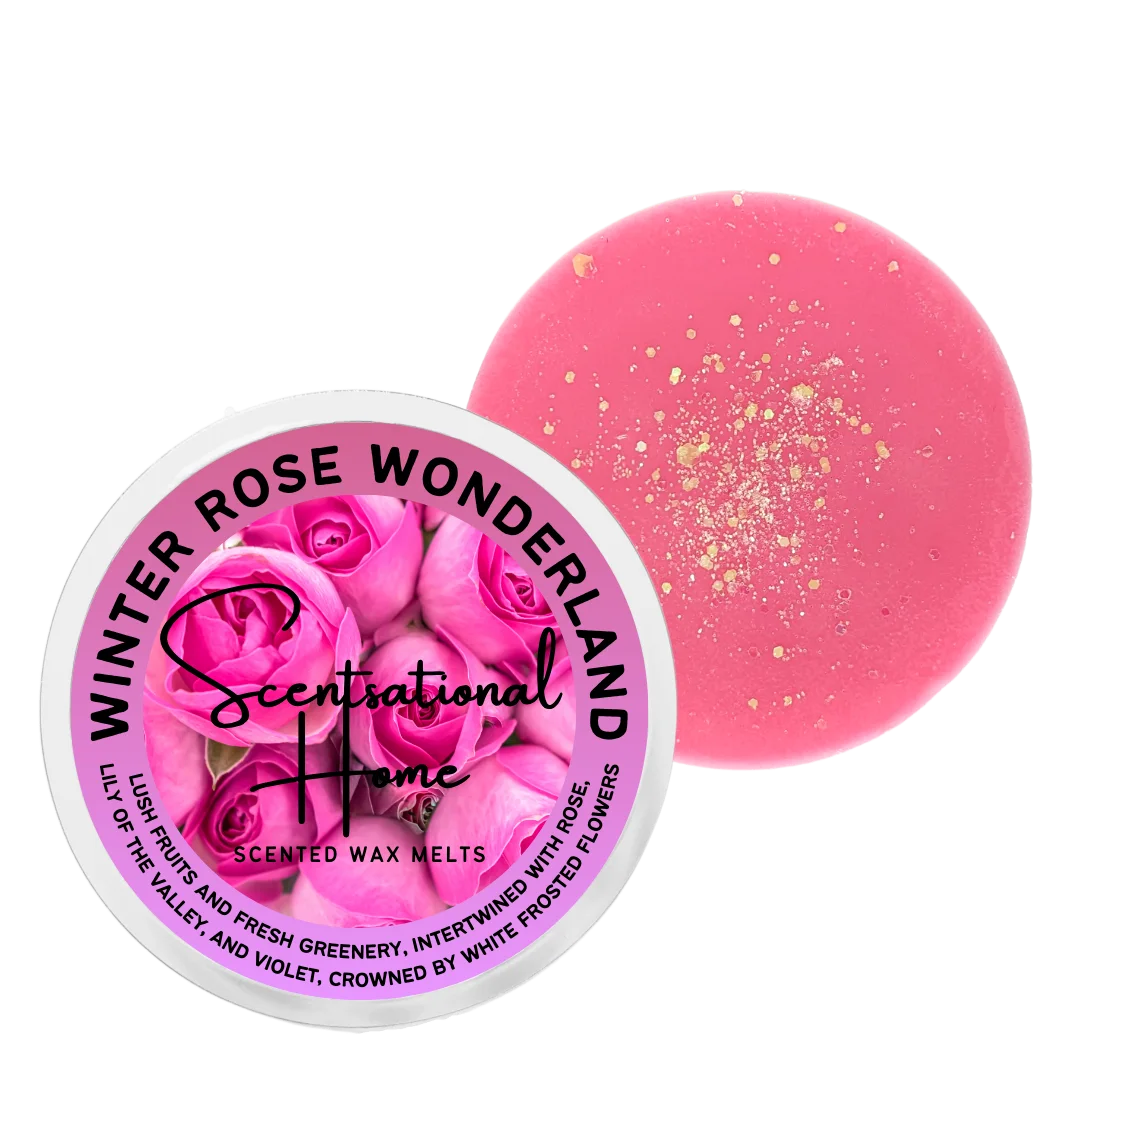 Winter Rose Wonderland Wax Melt